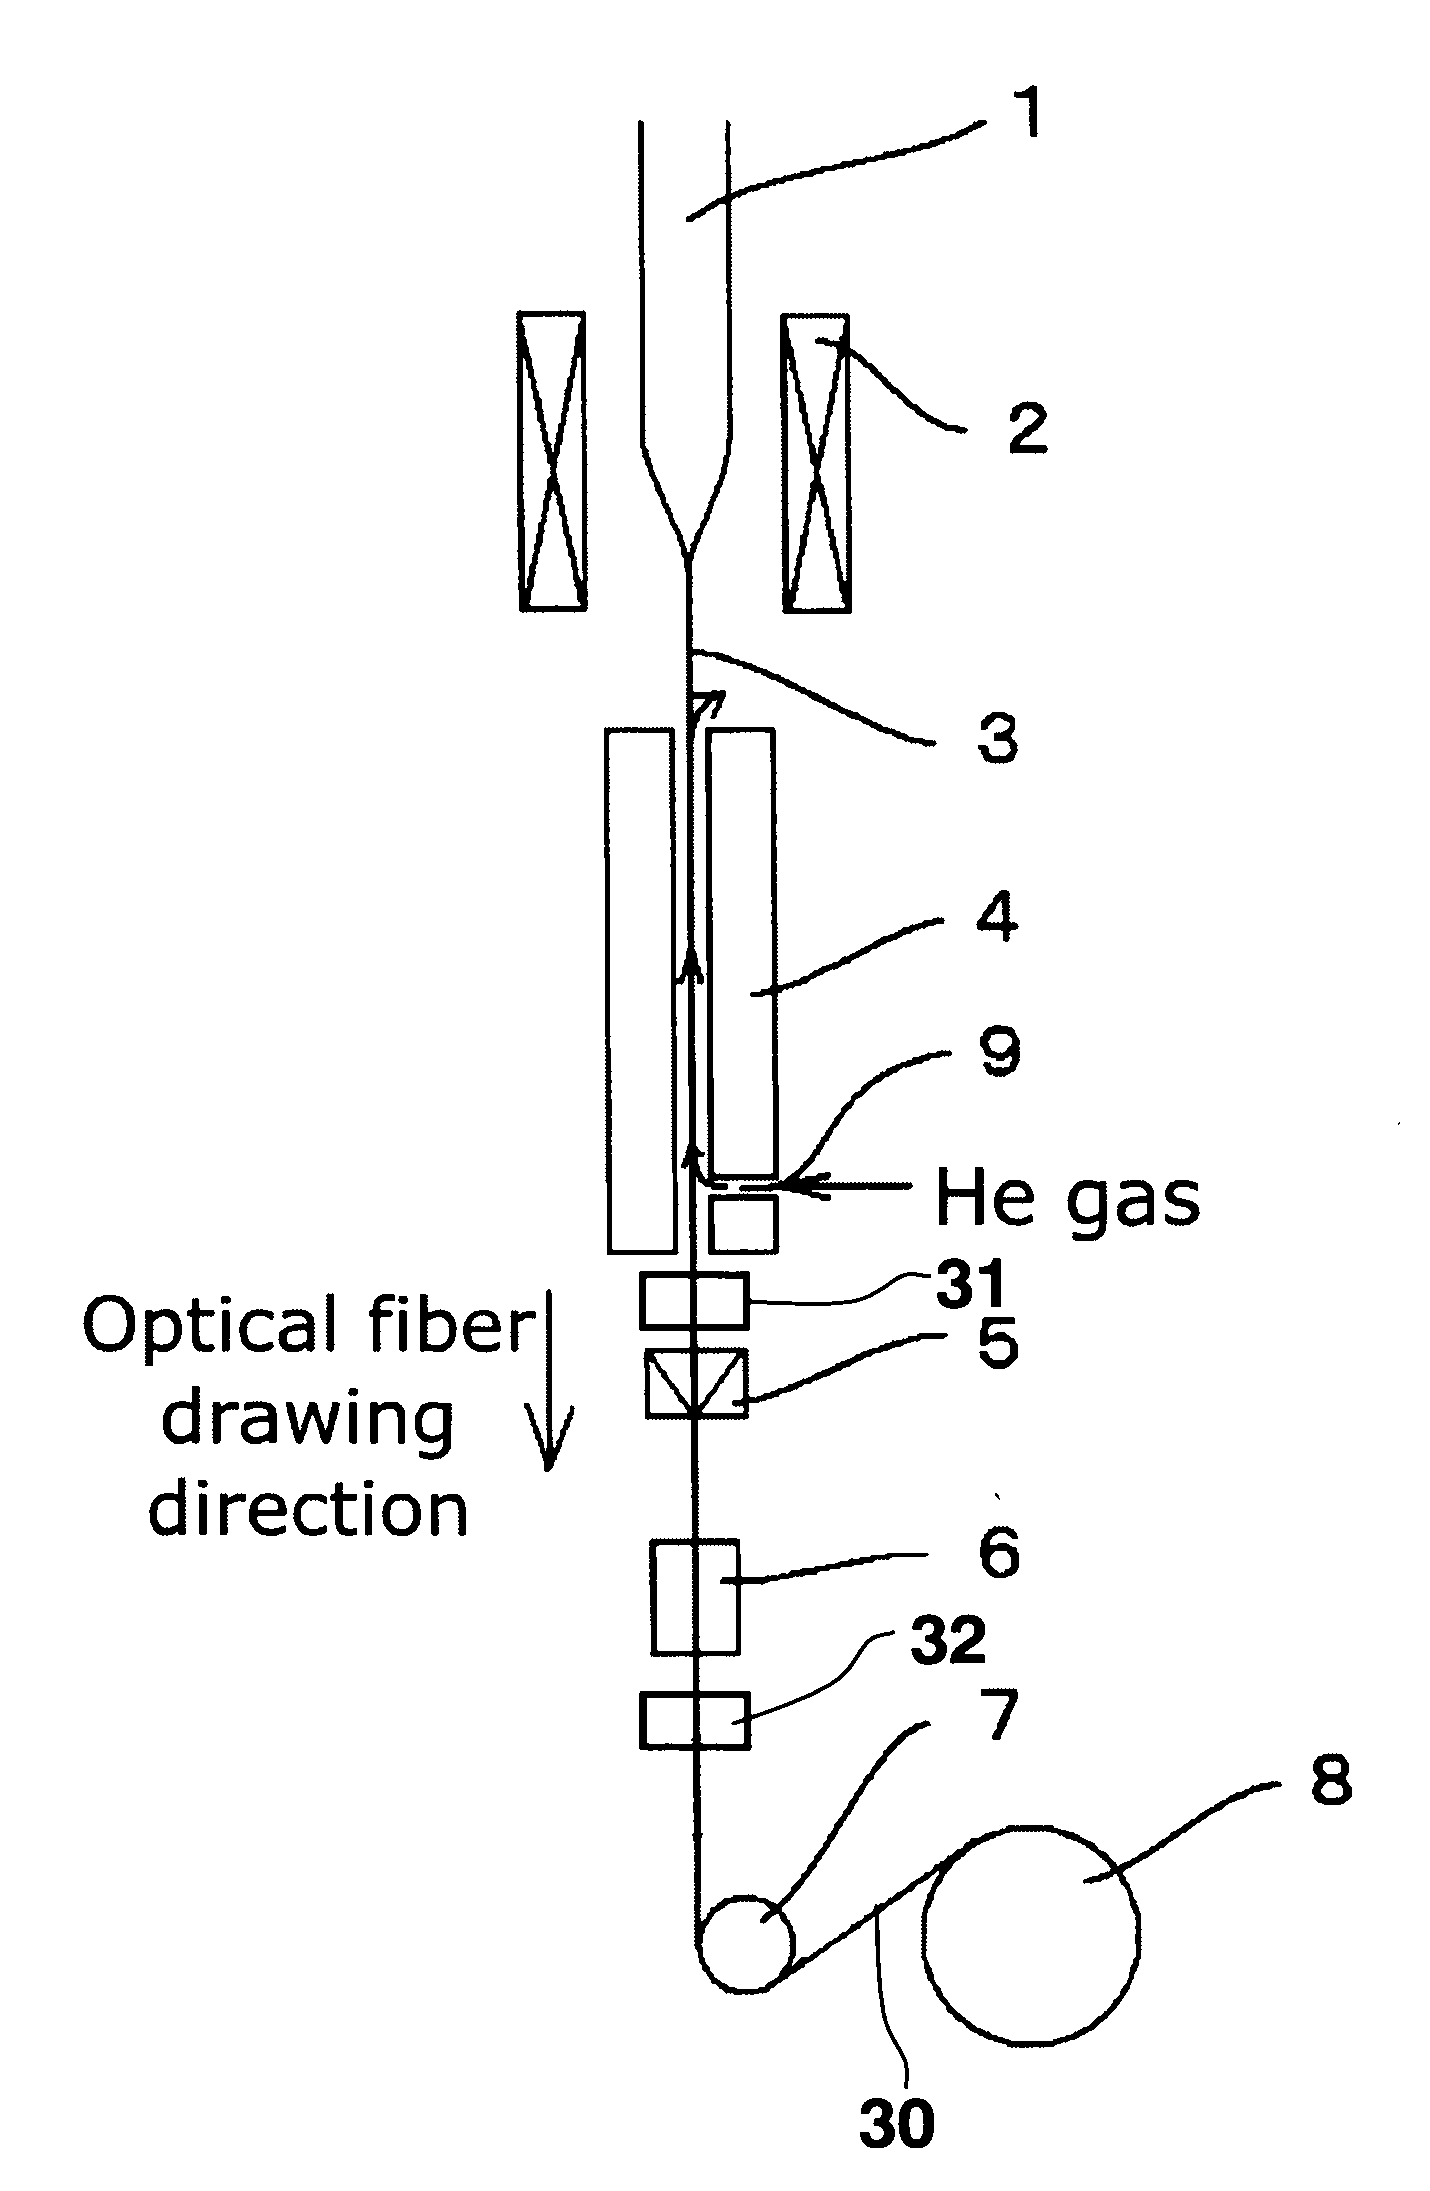 Optical fiber manufacturing methods